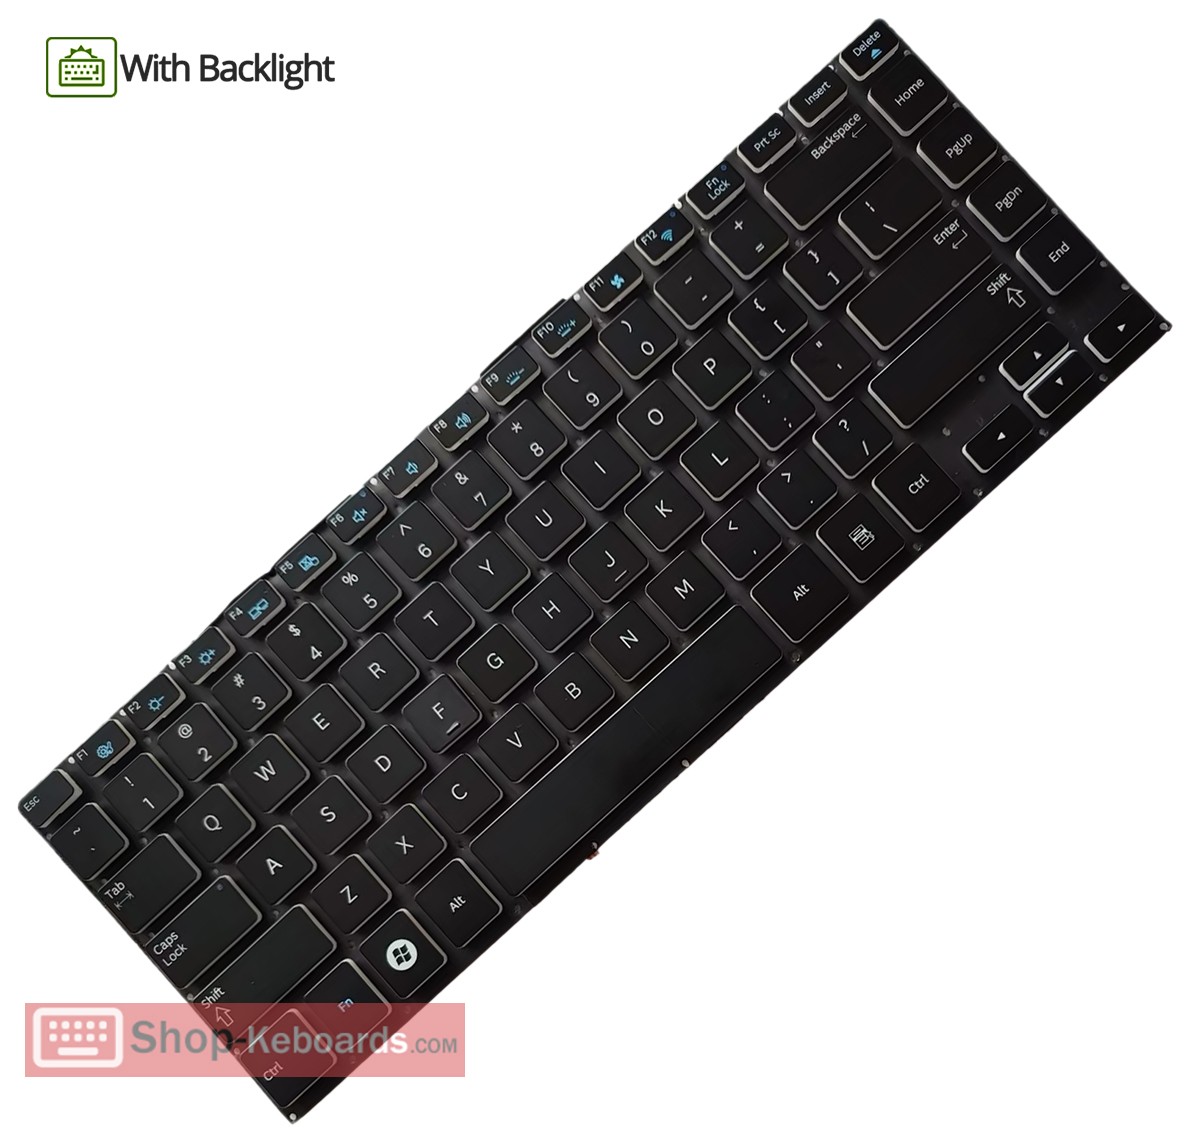 Samsung 700Z4B Keyboard replacement